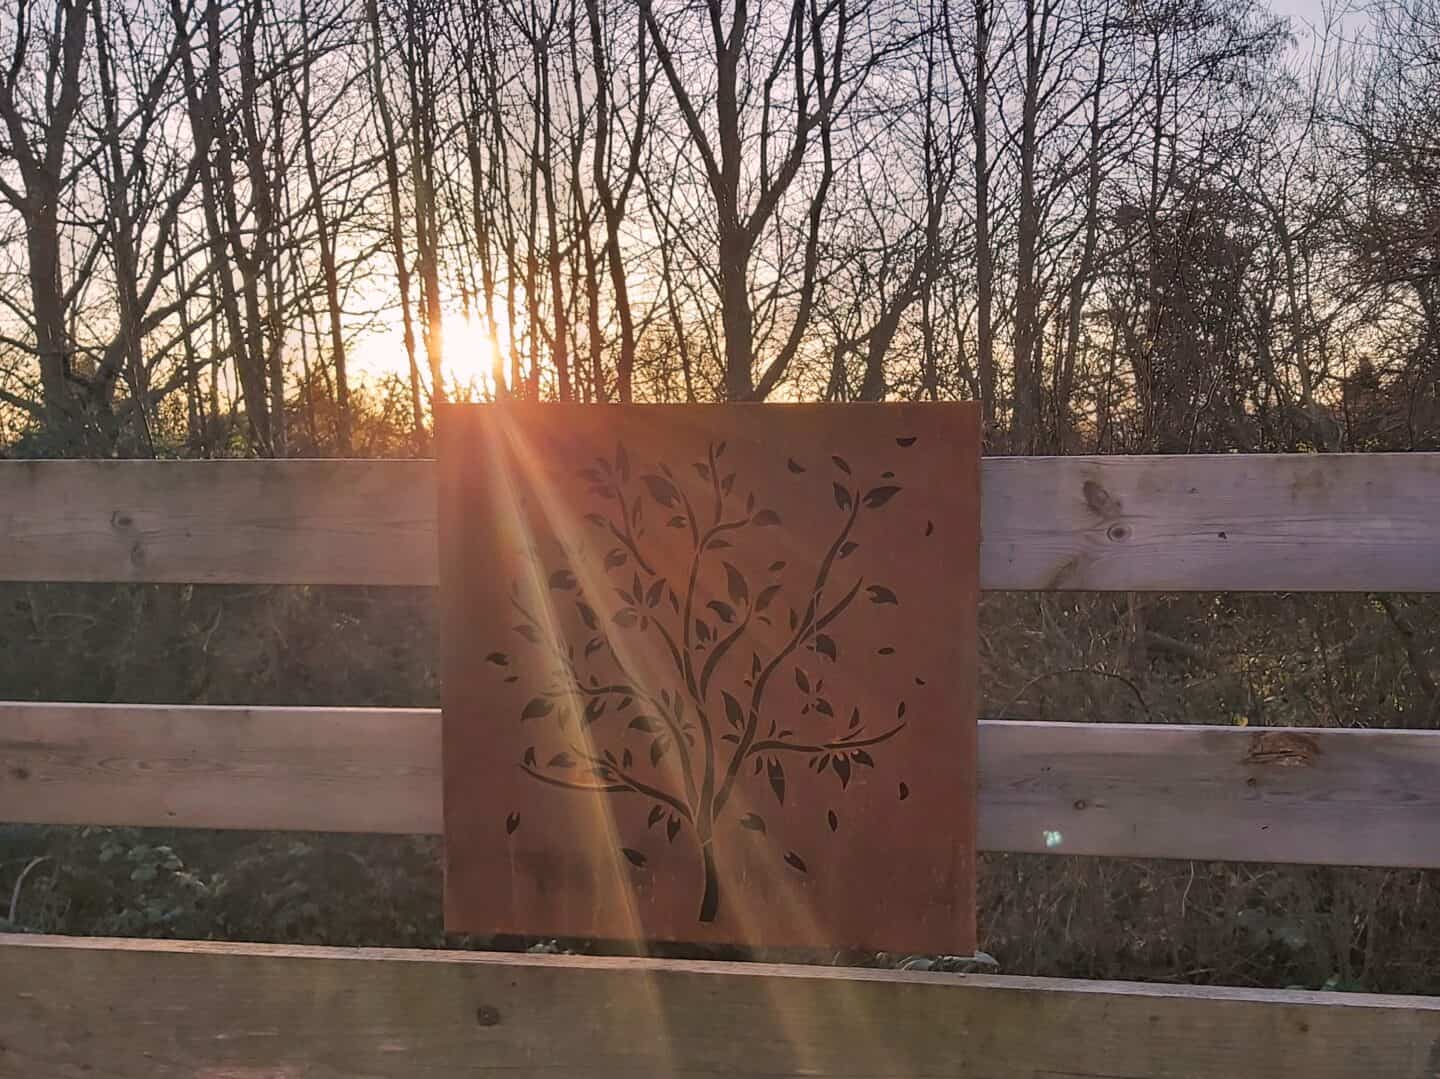 Narla garden artwork with the rising sun shining behind it